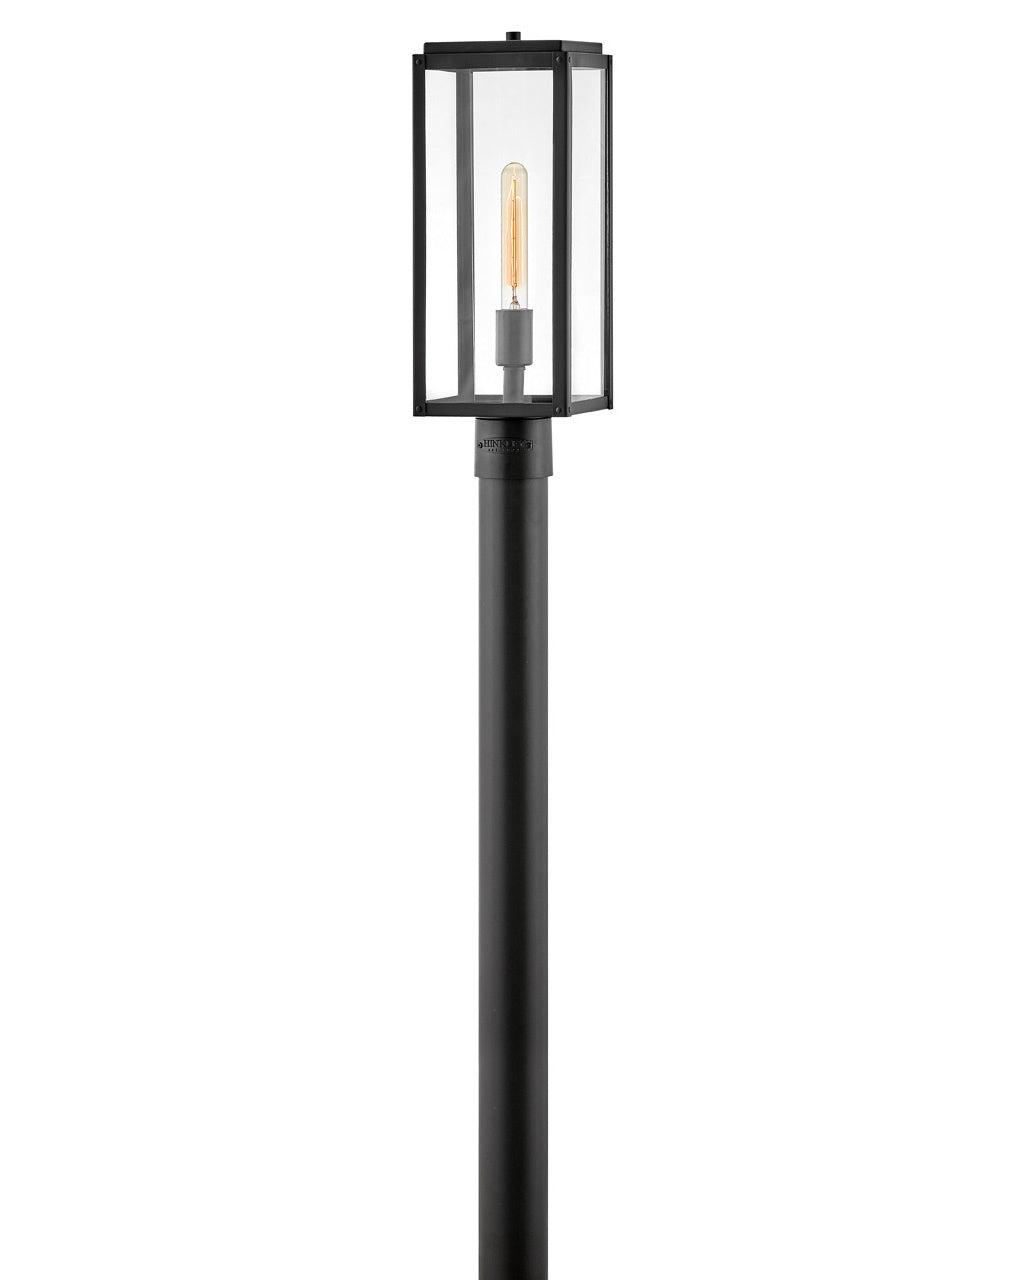 Max LED Post Top or Pier Mount in Black by Hinkley Lighting